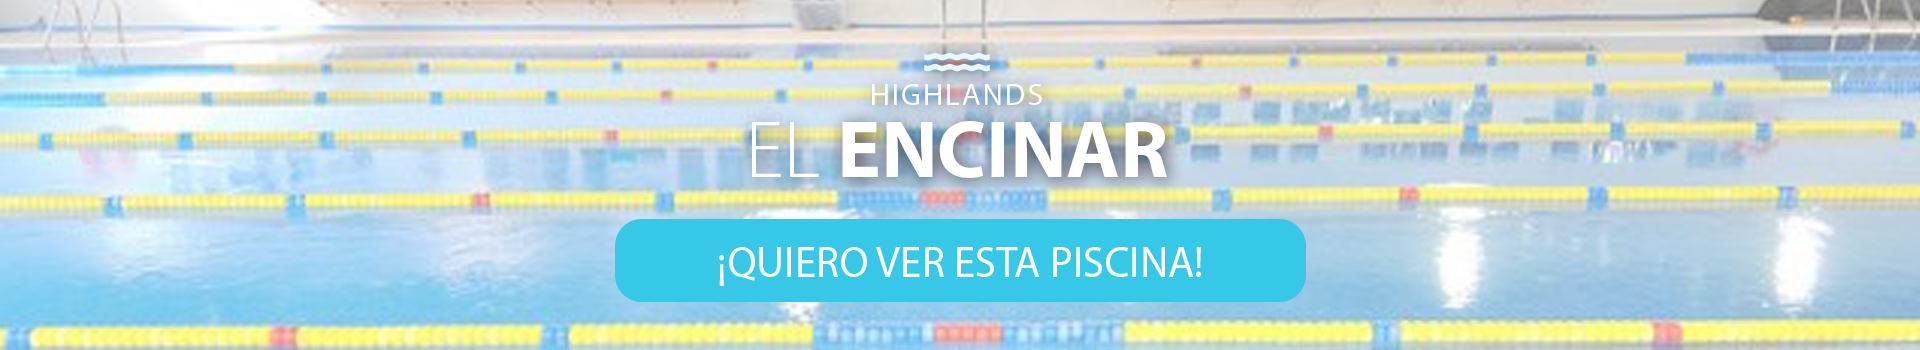 piscinas_home_elencinar_hover